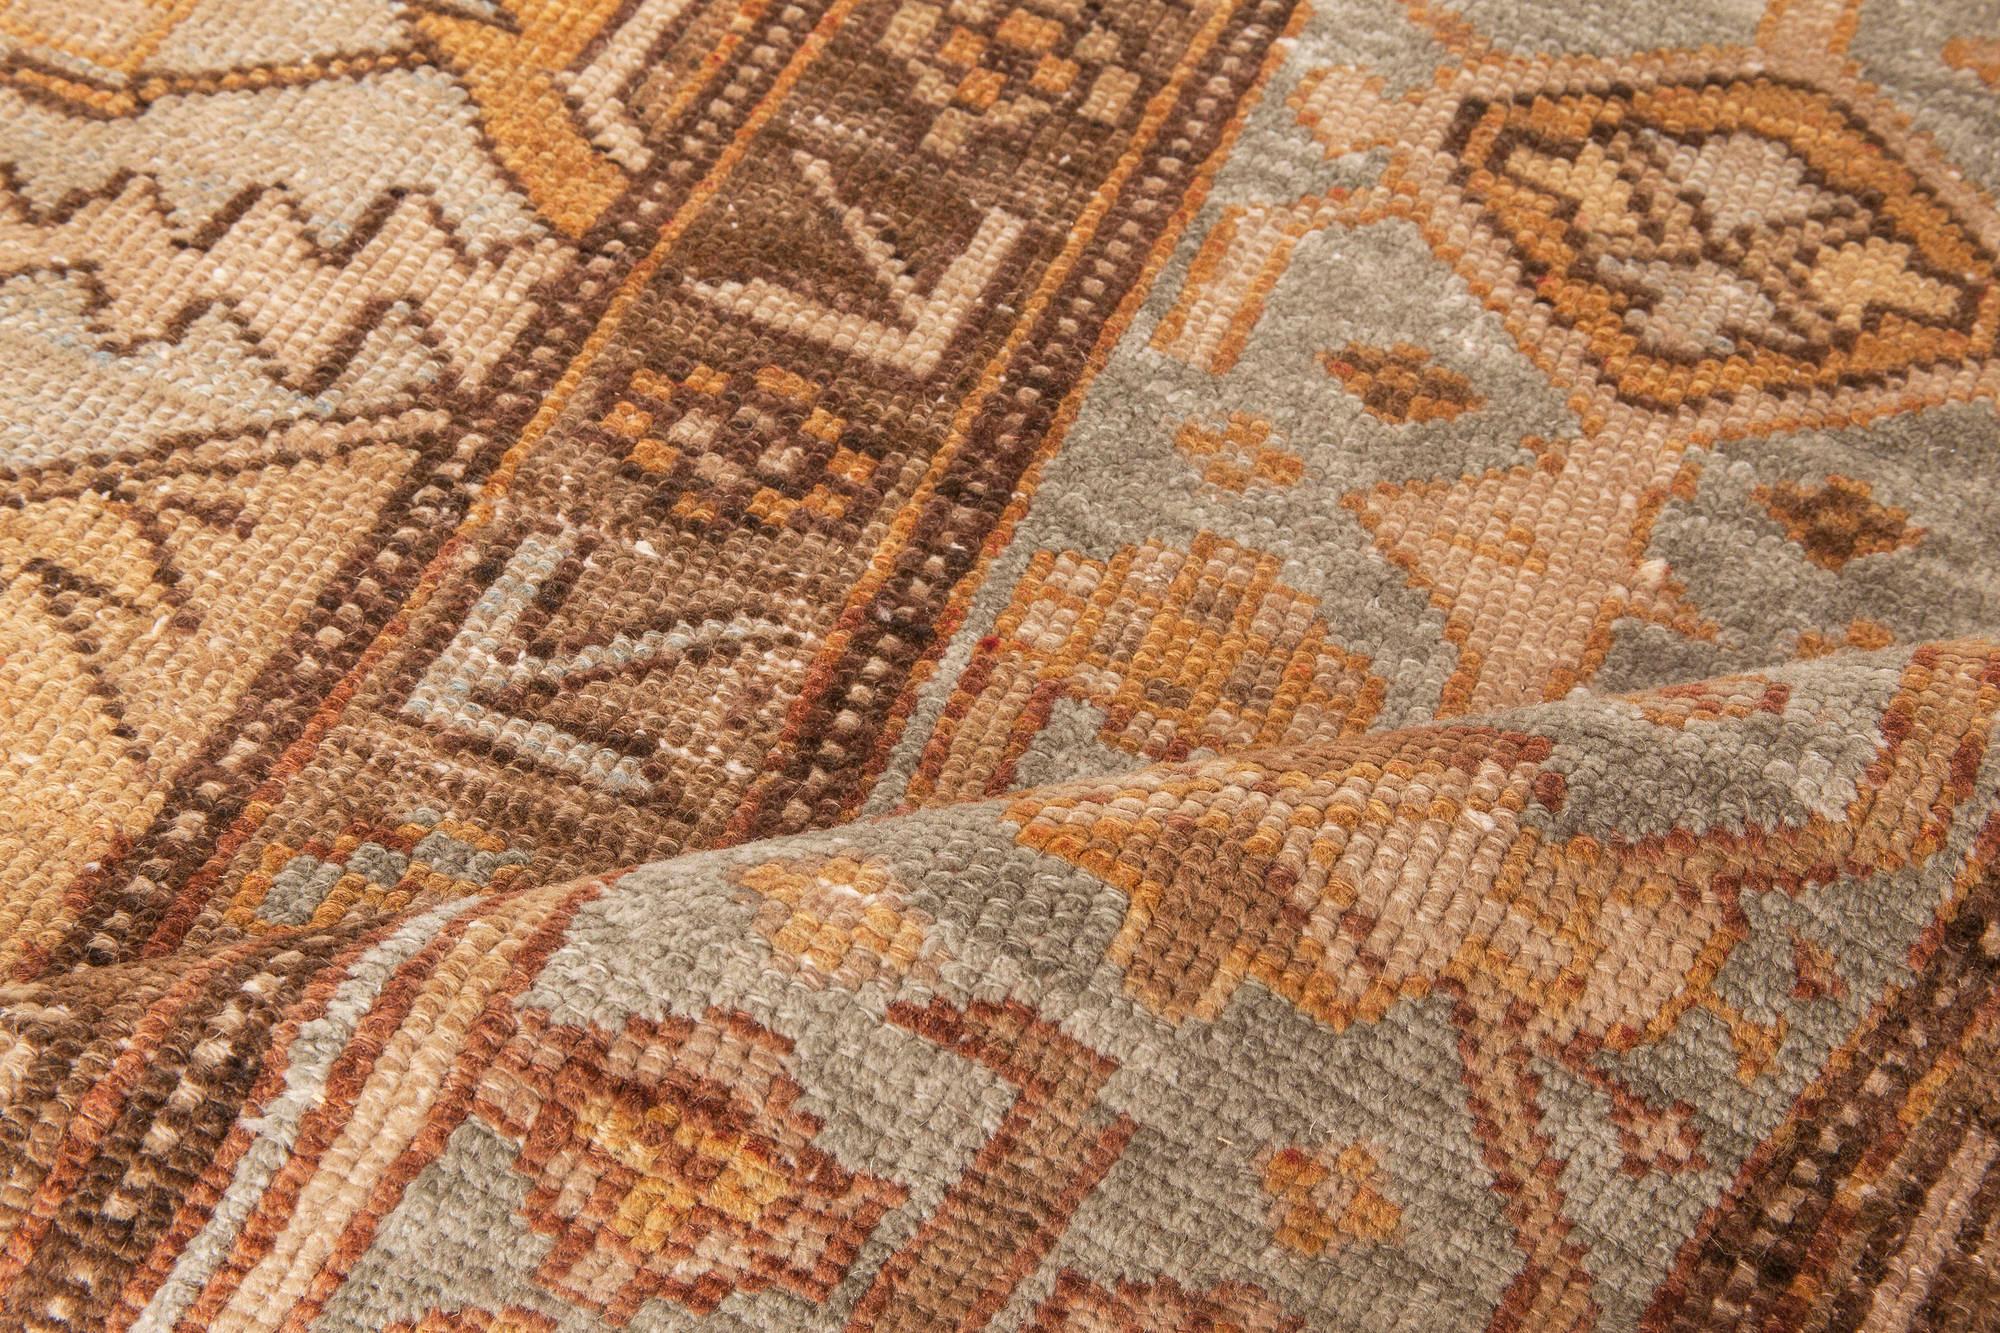 Fine Antique Persian Heriz rug
Size: 7'5